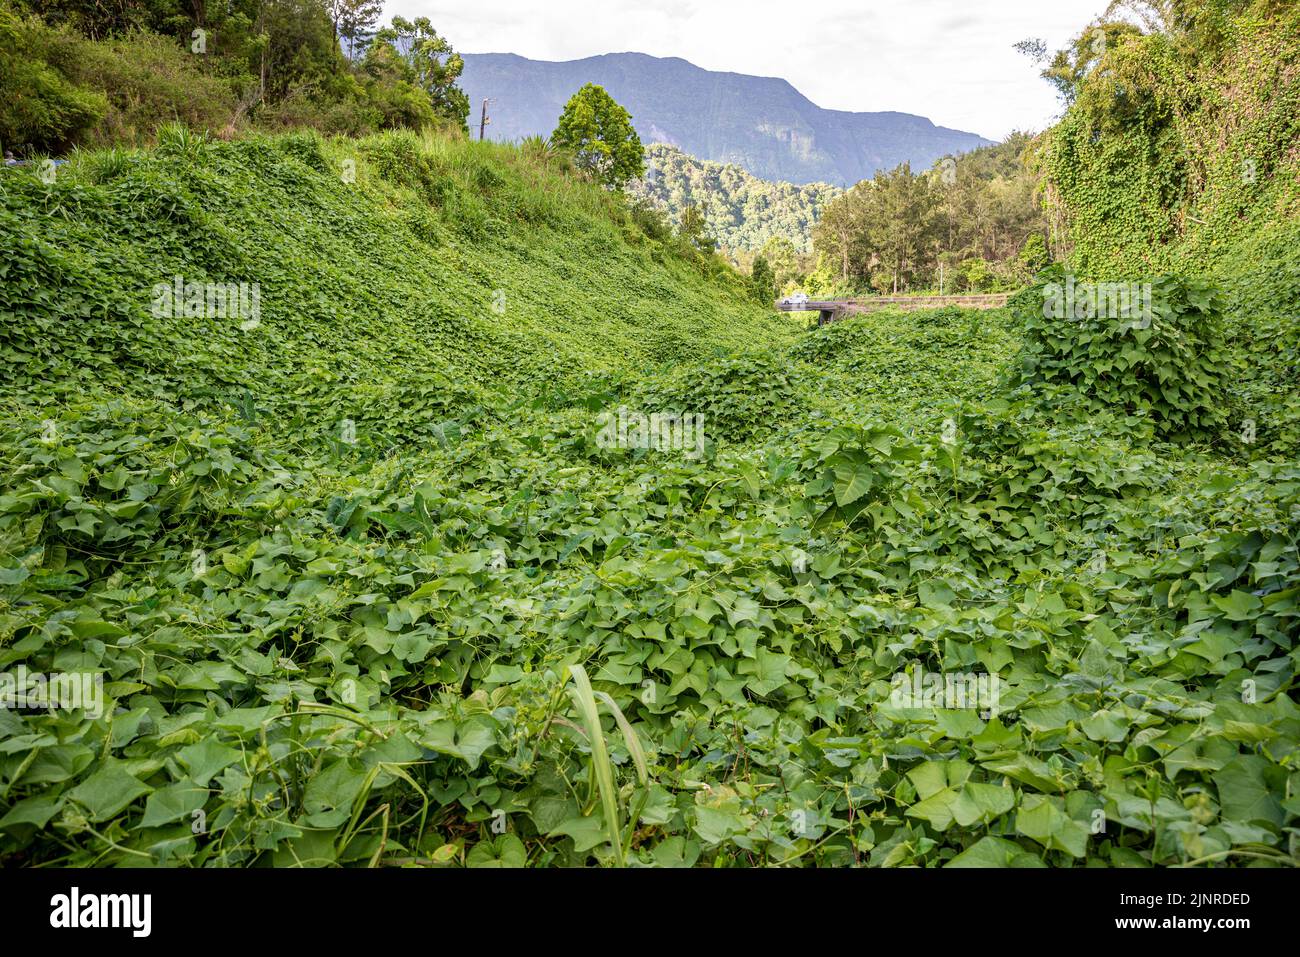 Lush green vegetation in Réunion Island, France Stock Photo